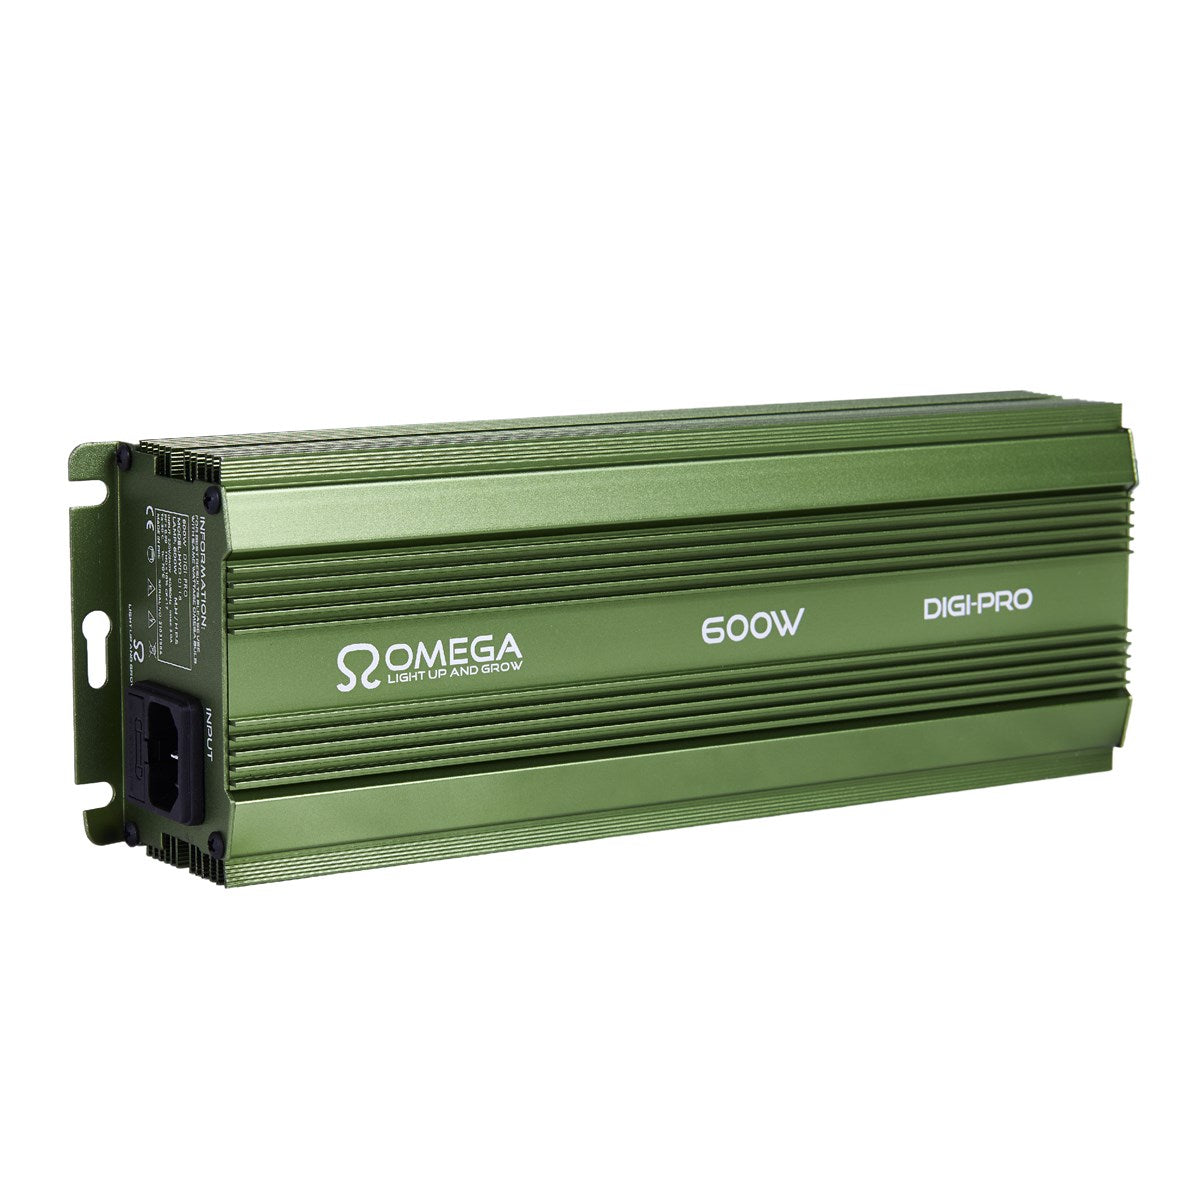 Omega Eurowing 600W Digi Kit